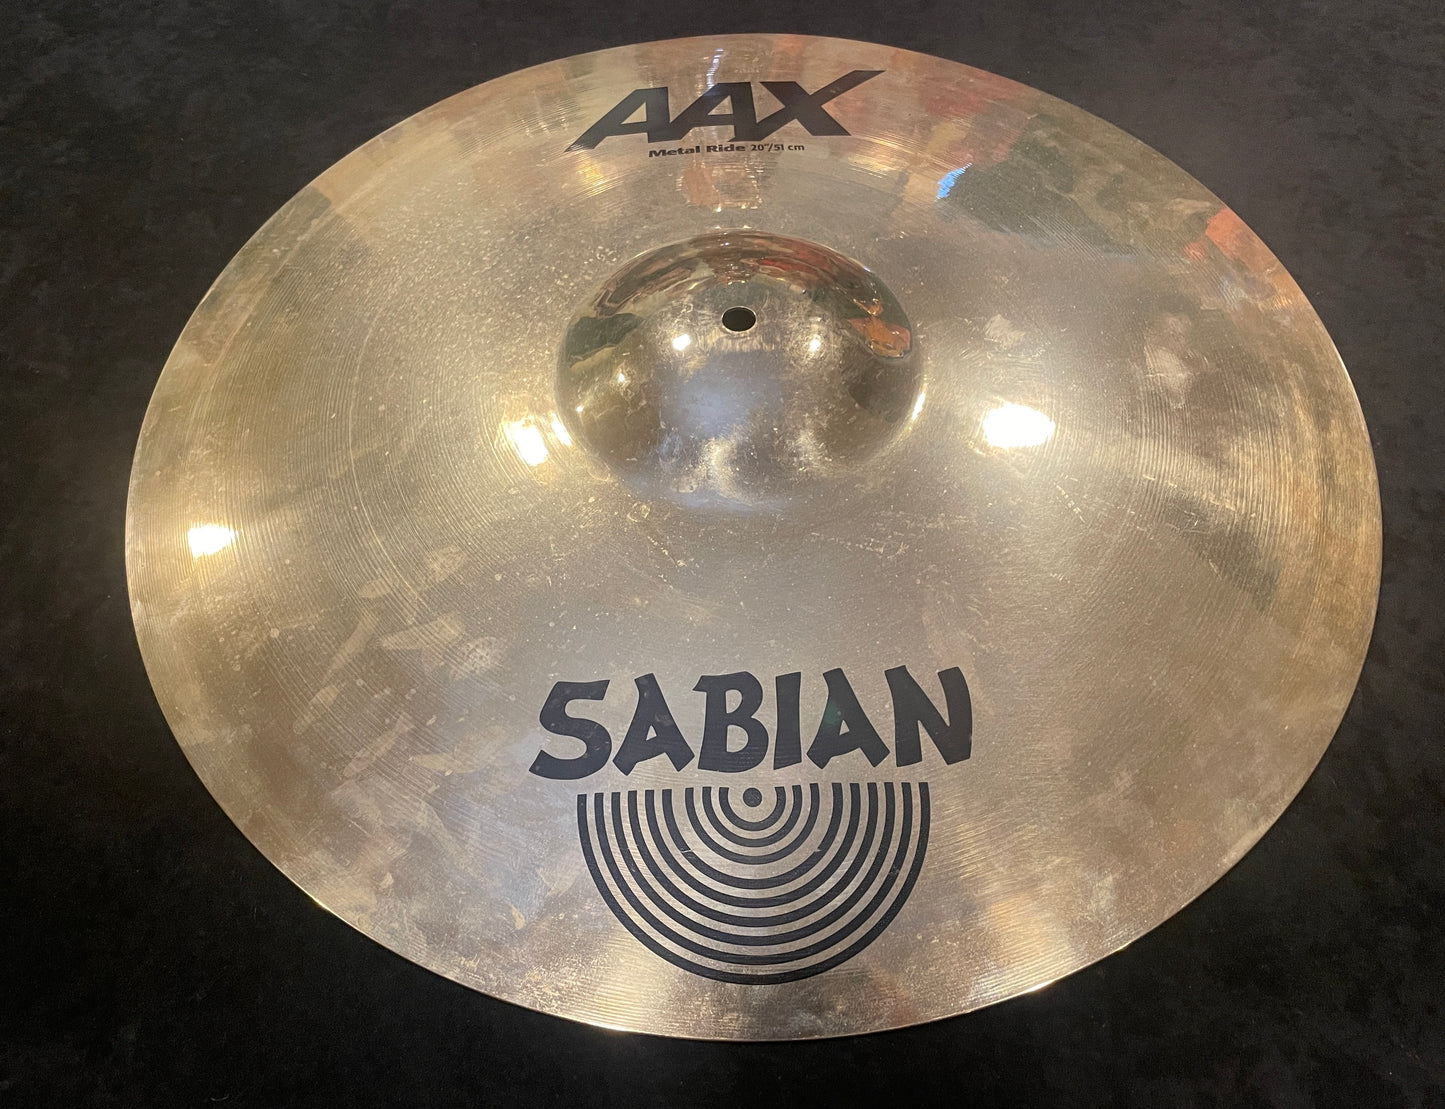 20" Sabian AAX Metal Ride Cymbal 3376g 22014XB